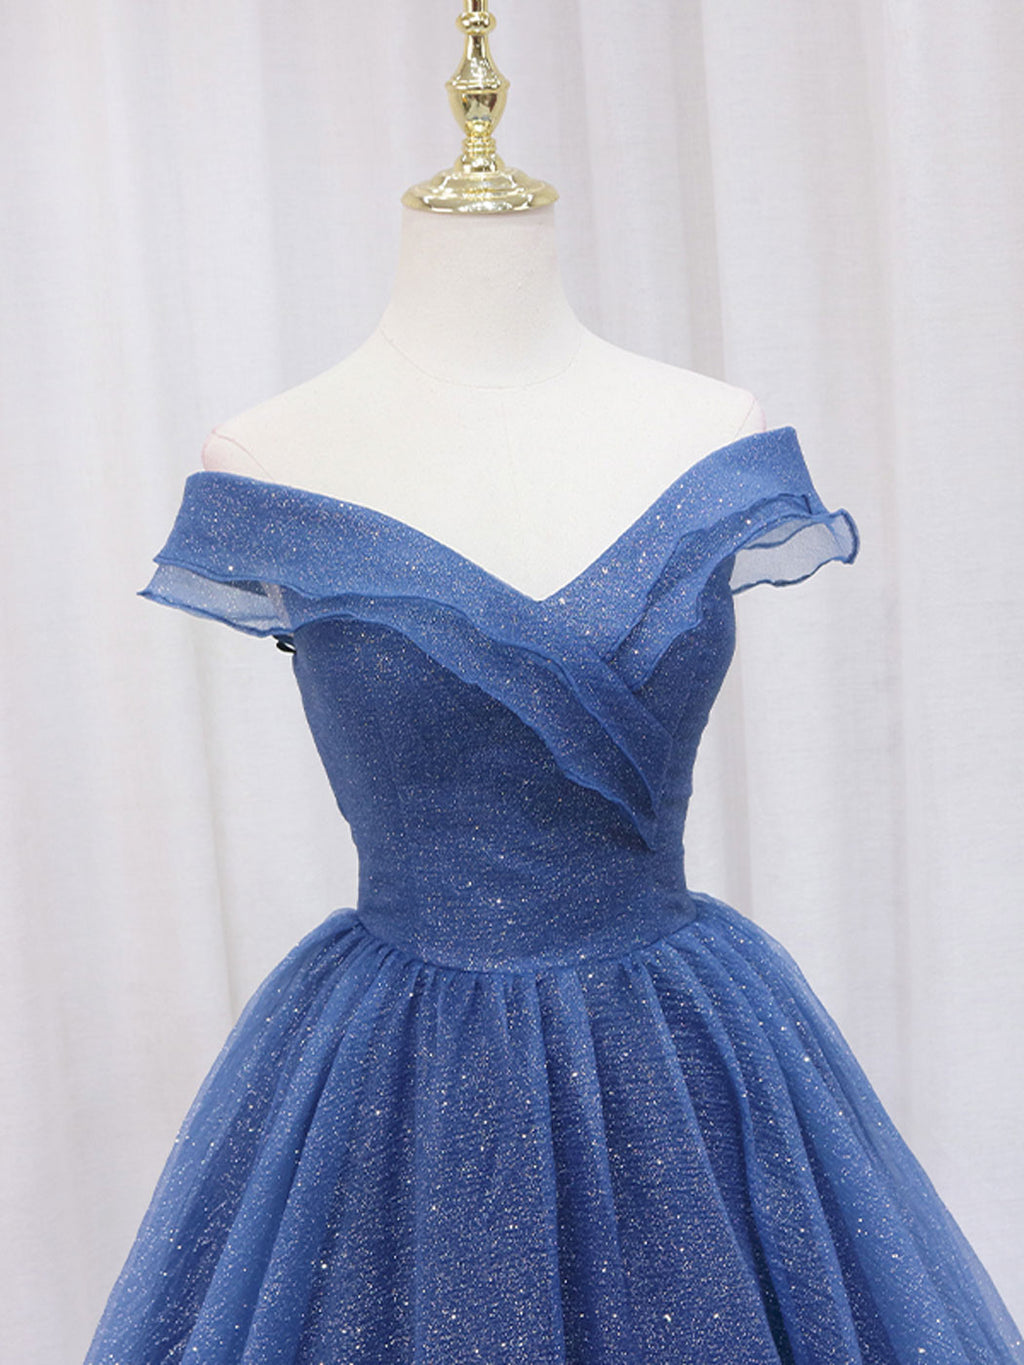 A-Line Off Shoulder Dark Blue Long Prom Dress, Shiny Tulle Long Graduation Dress